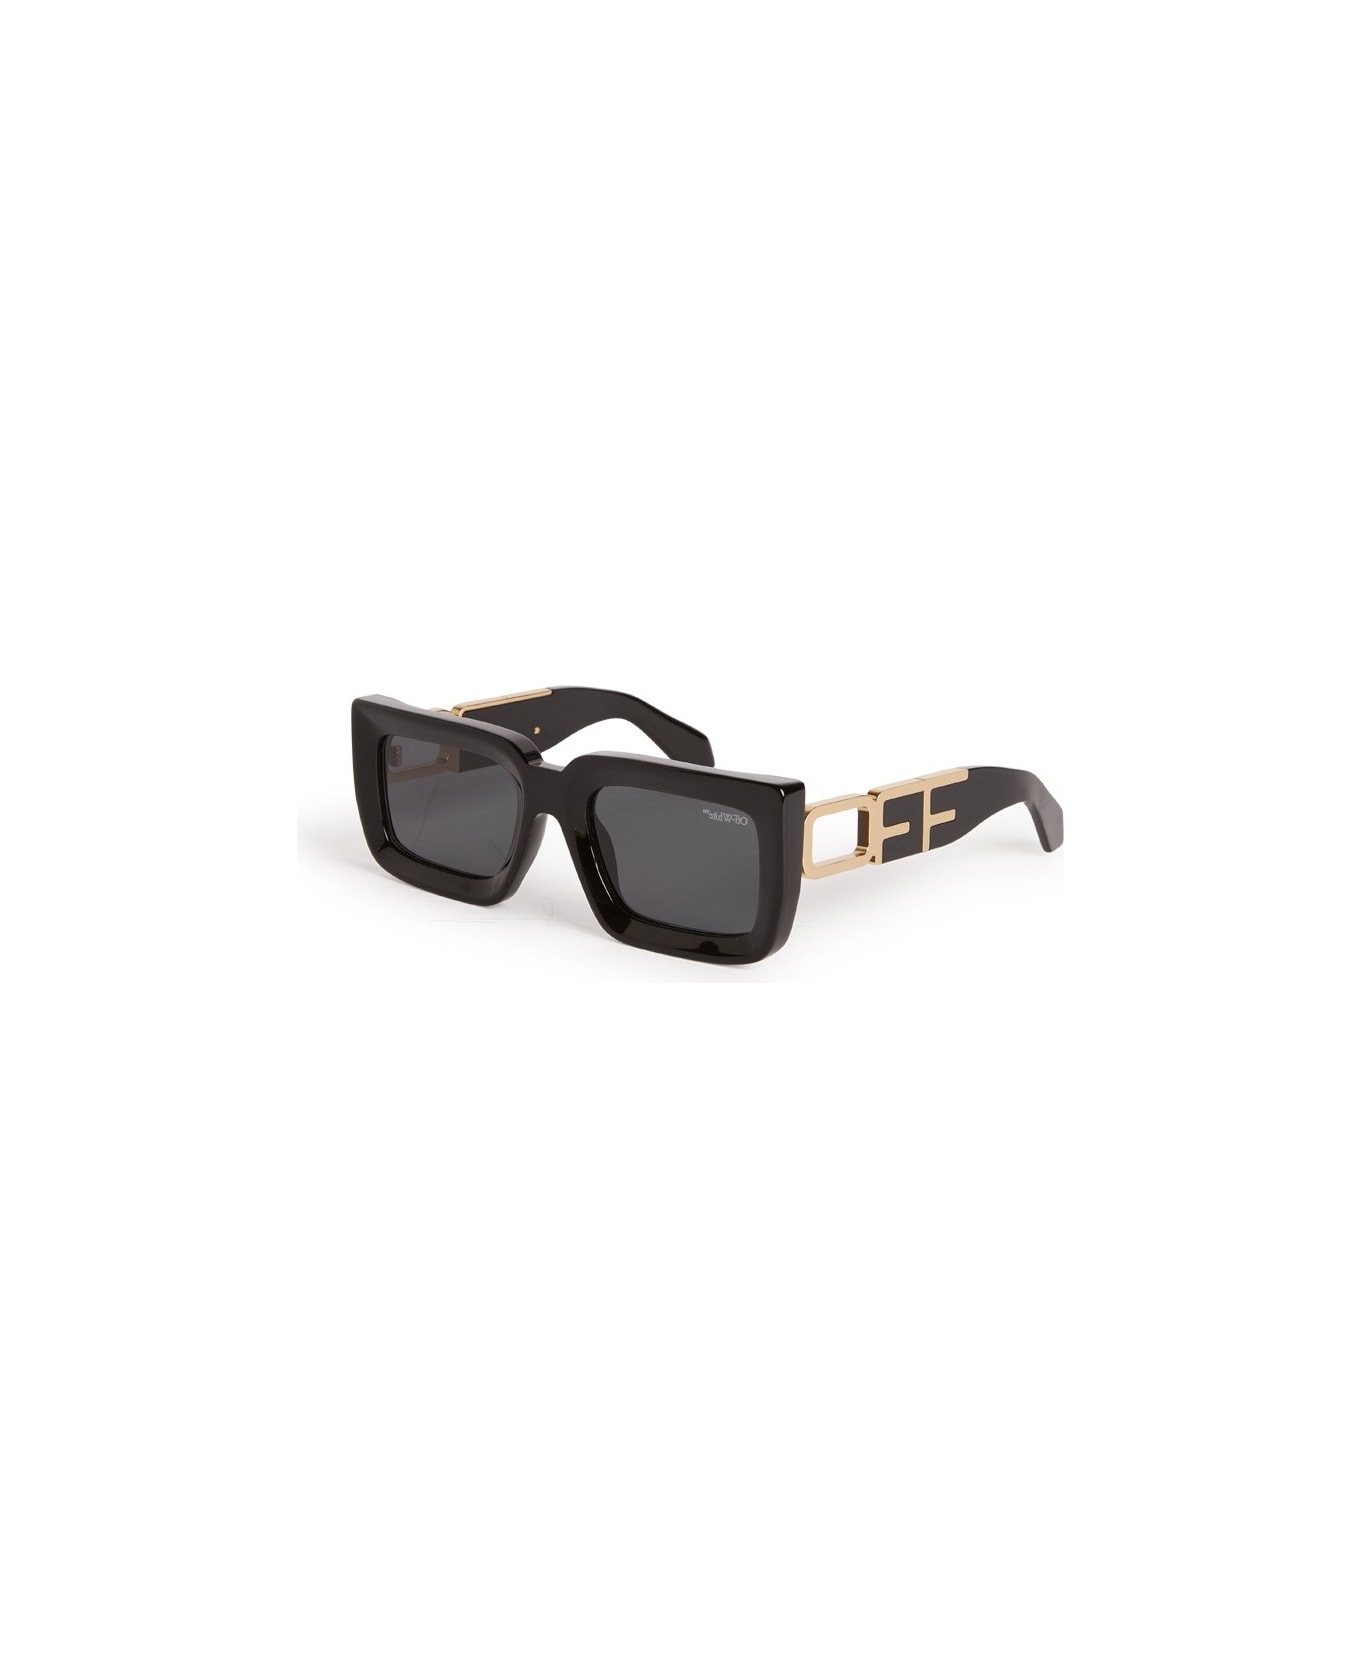 Off-White BOSTON SUNGLASSES Sunglasses - Black サングラス